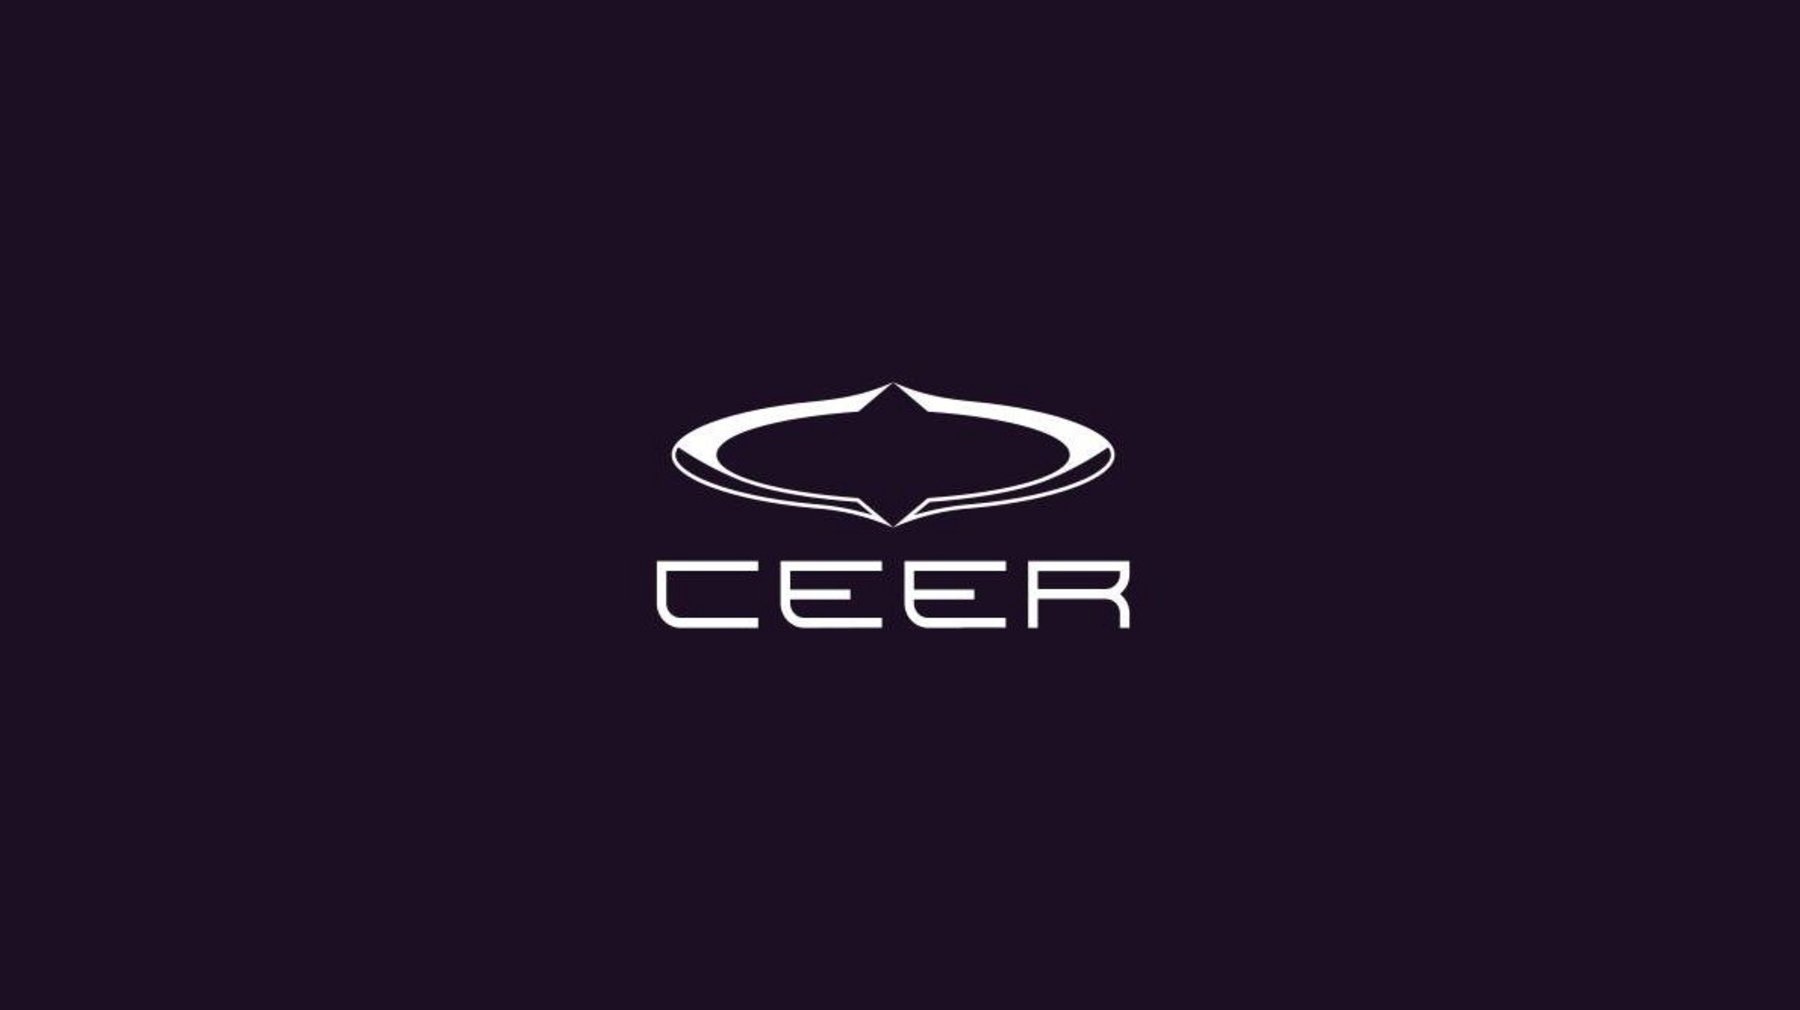 Meet Ceer Saudi Arabia’s first electric vehicle brand Business